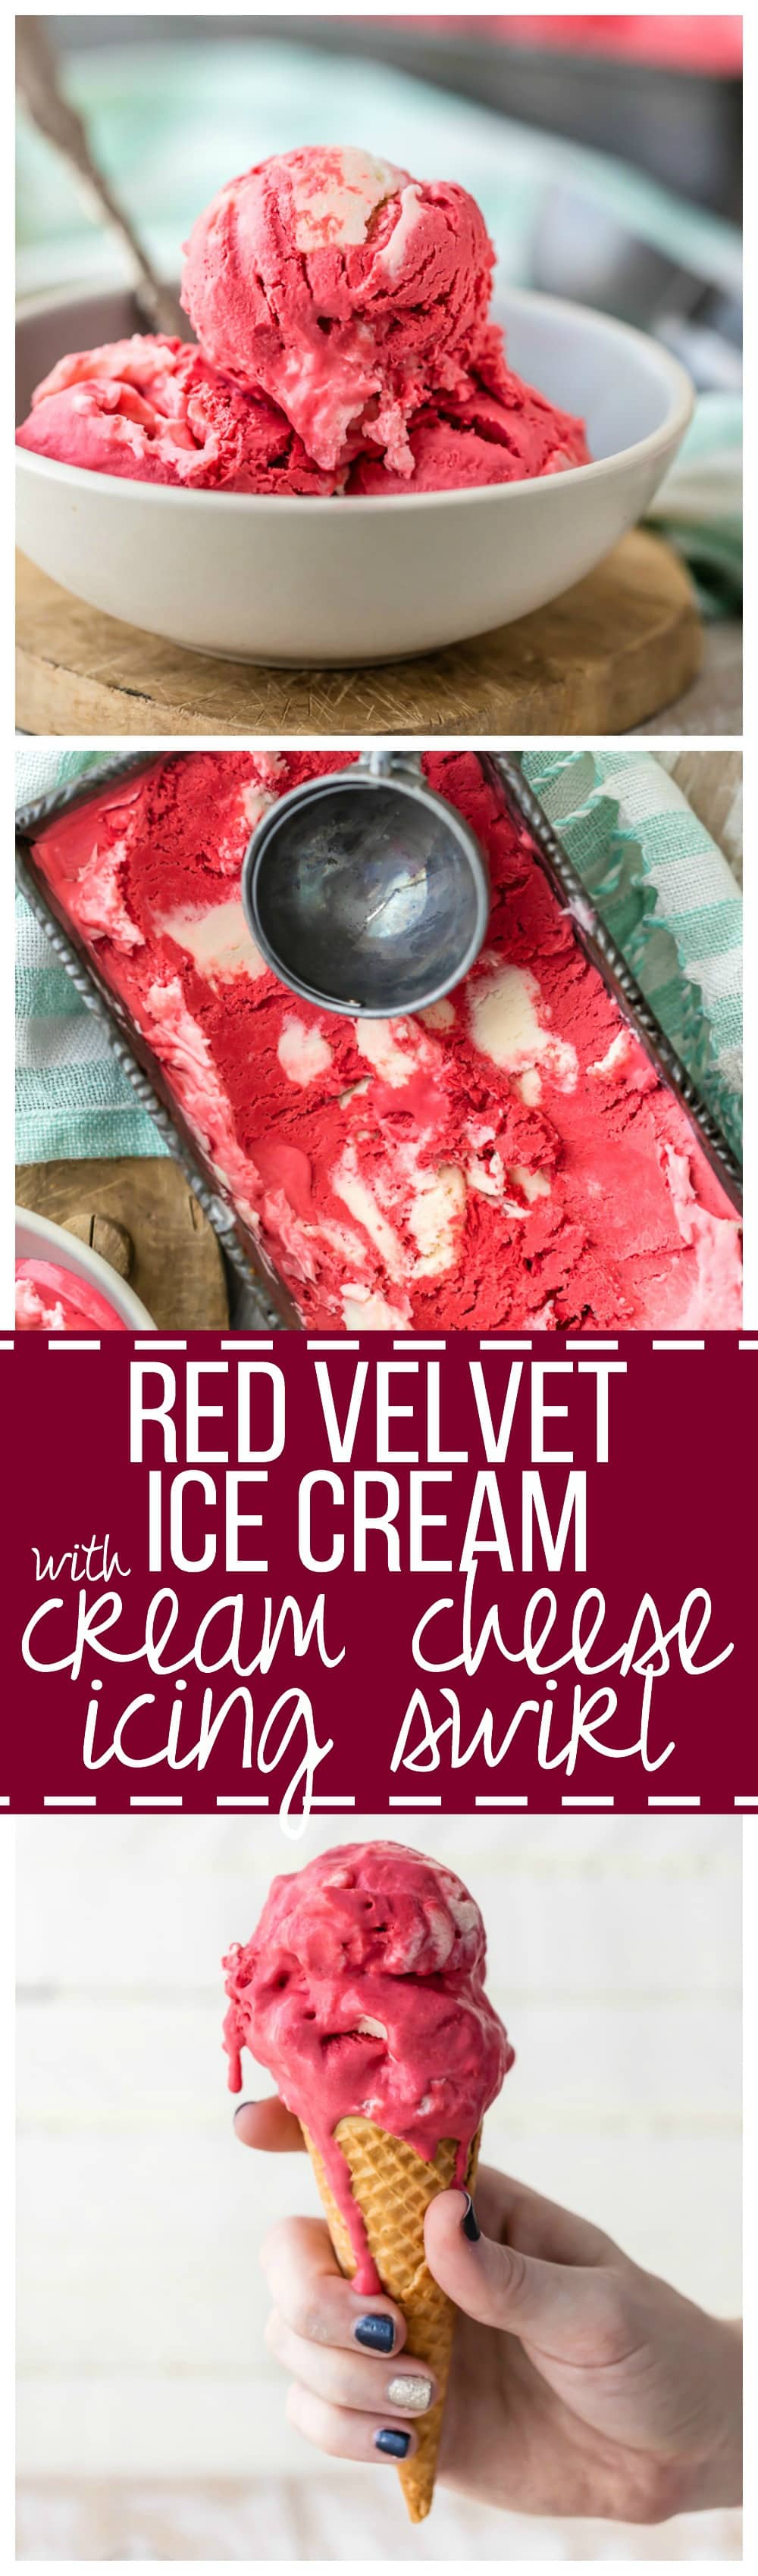 Red Velvet Ice Cream With Cream Cheese Icing Swirl The